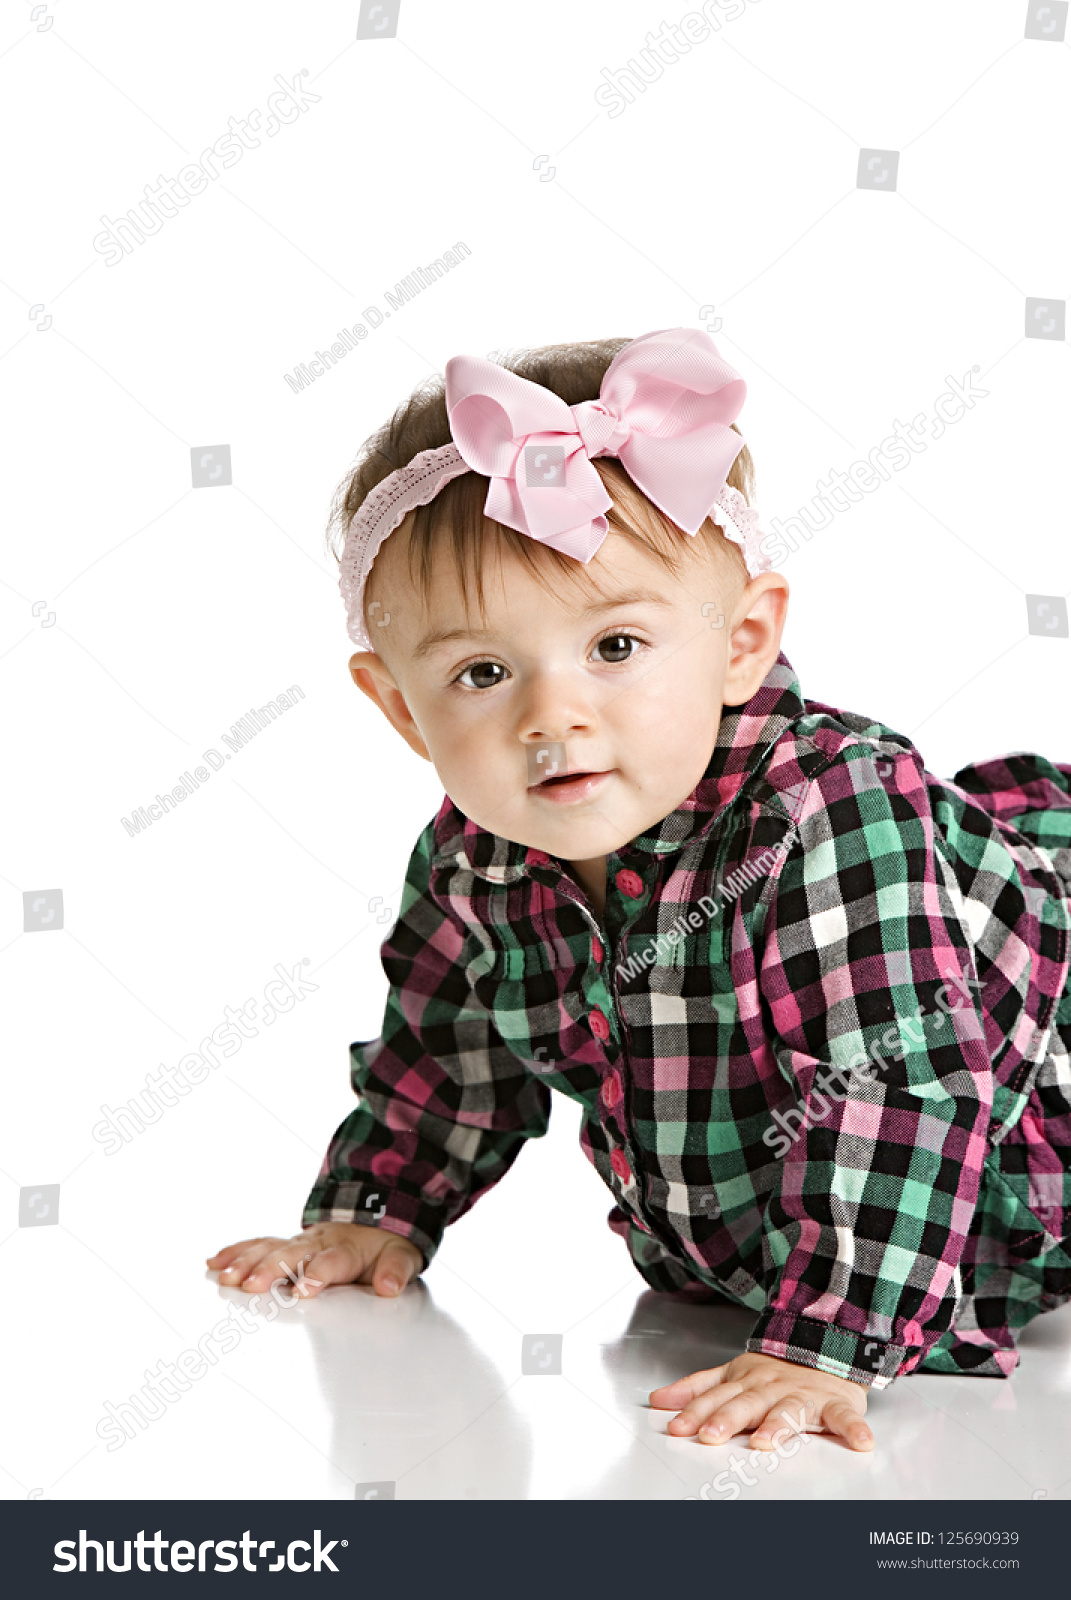 baby girl plaid shirt